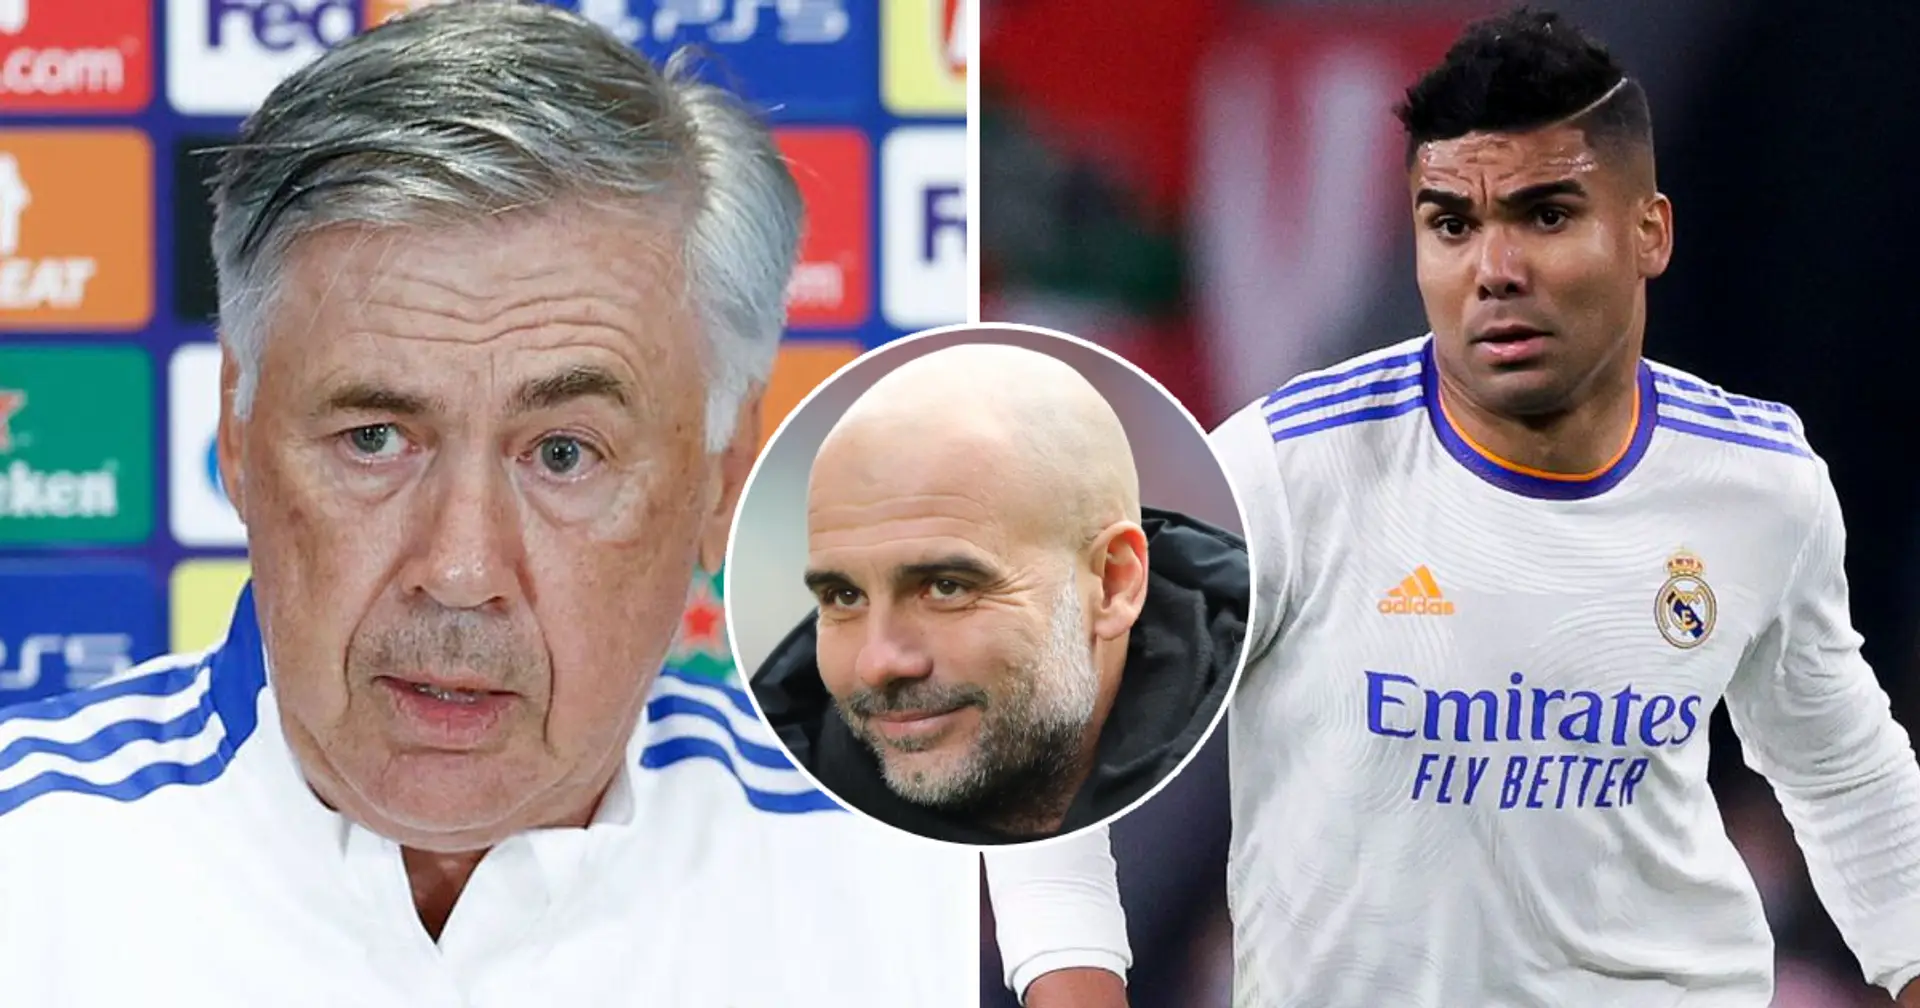 Ancelotti's 5-point plan to destroy Manchester City revealed